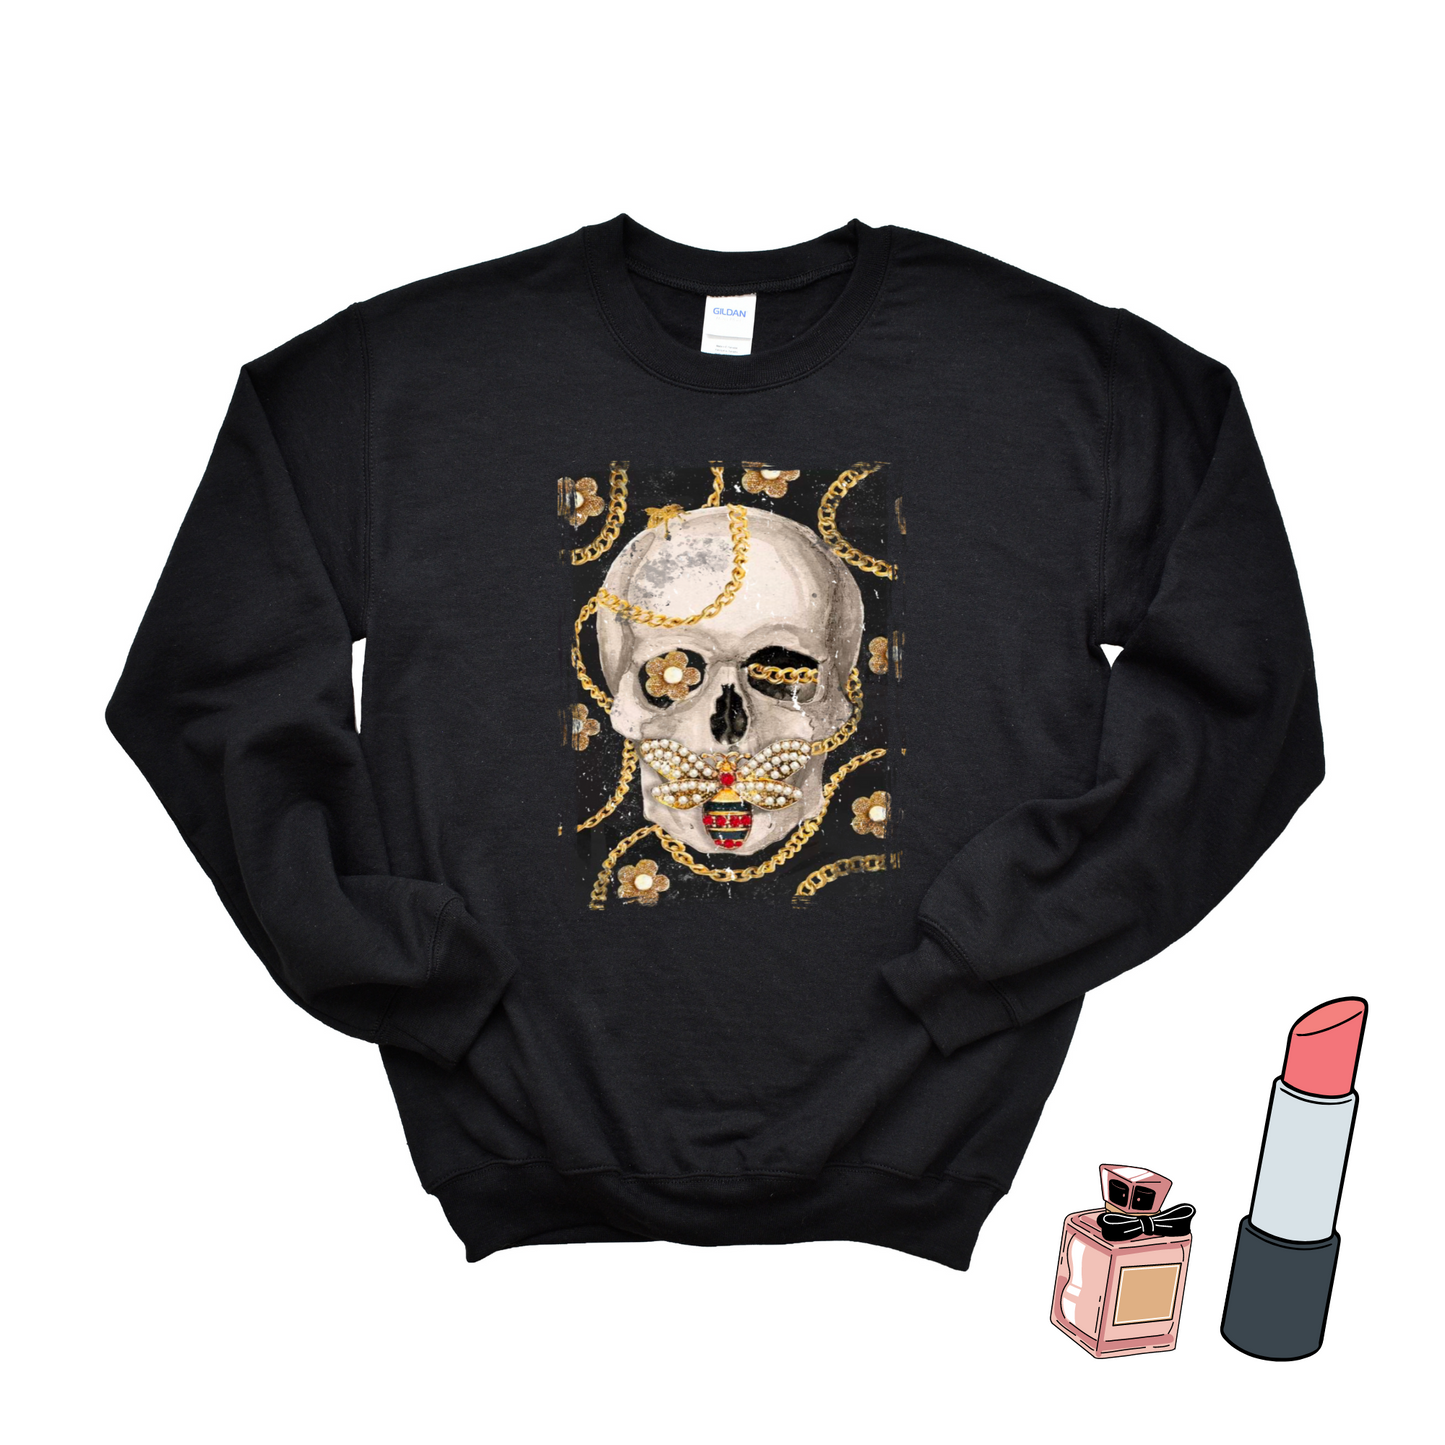 Bee & Skull Graphic Crew Neck Sweater